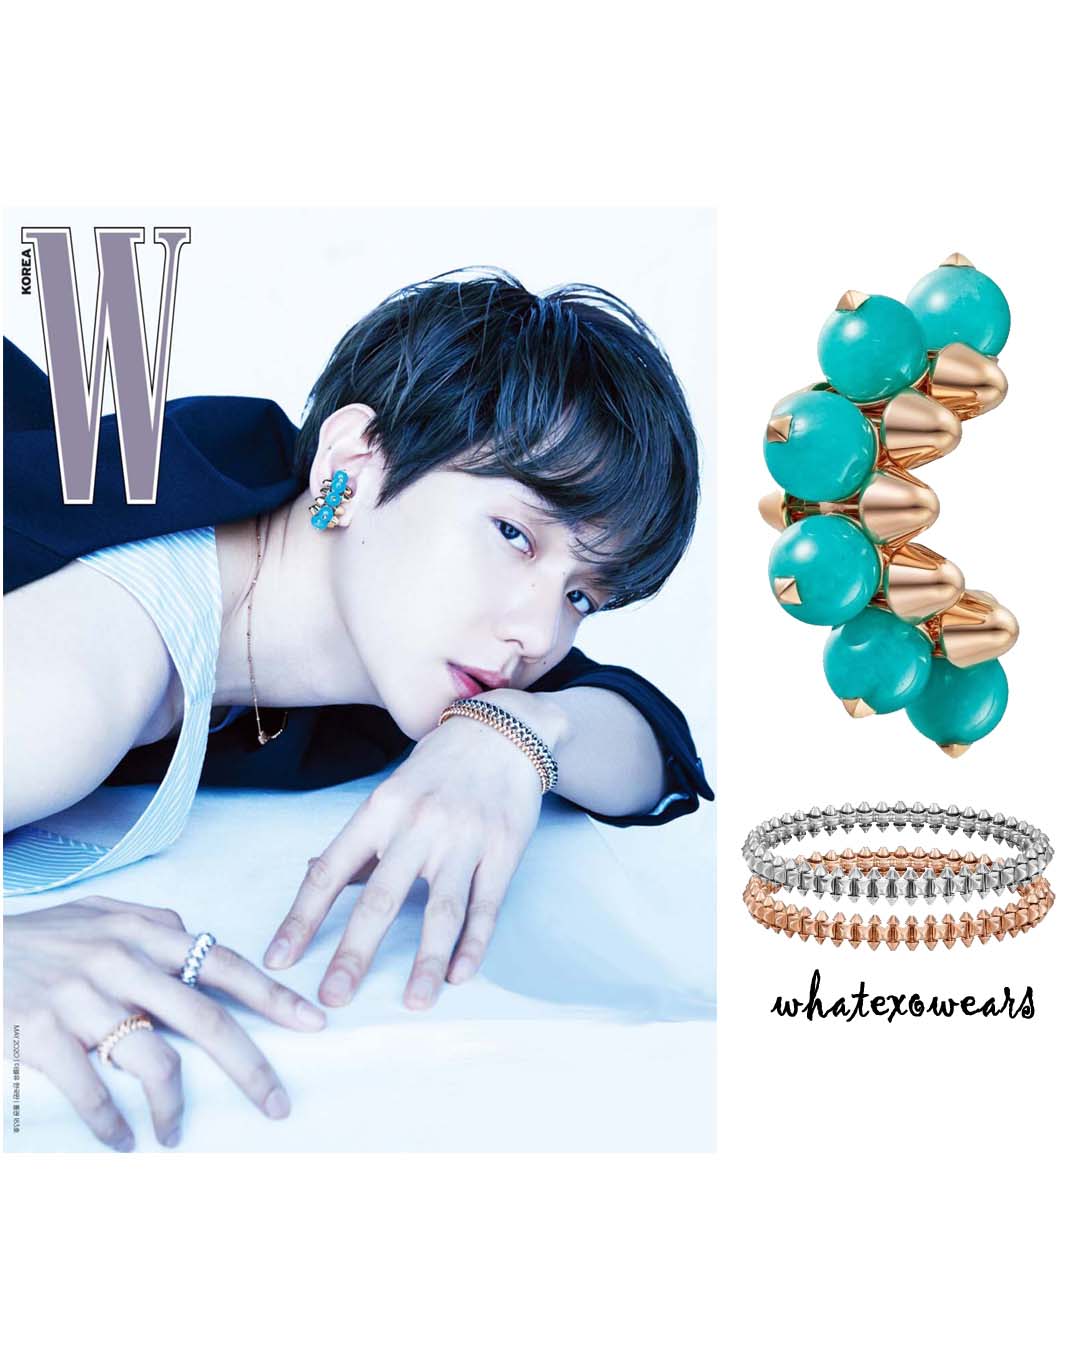 bracelet, rings and byun baekhyun - image #7743145 on Favim.com